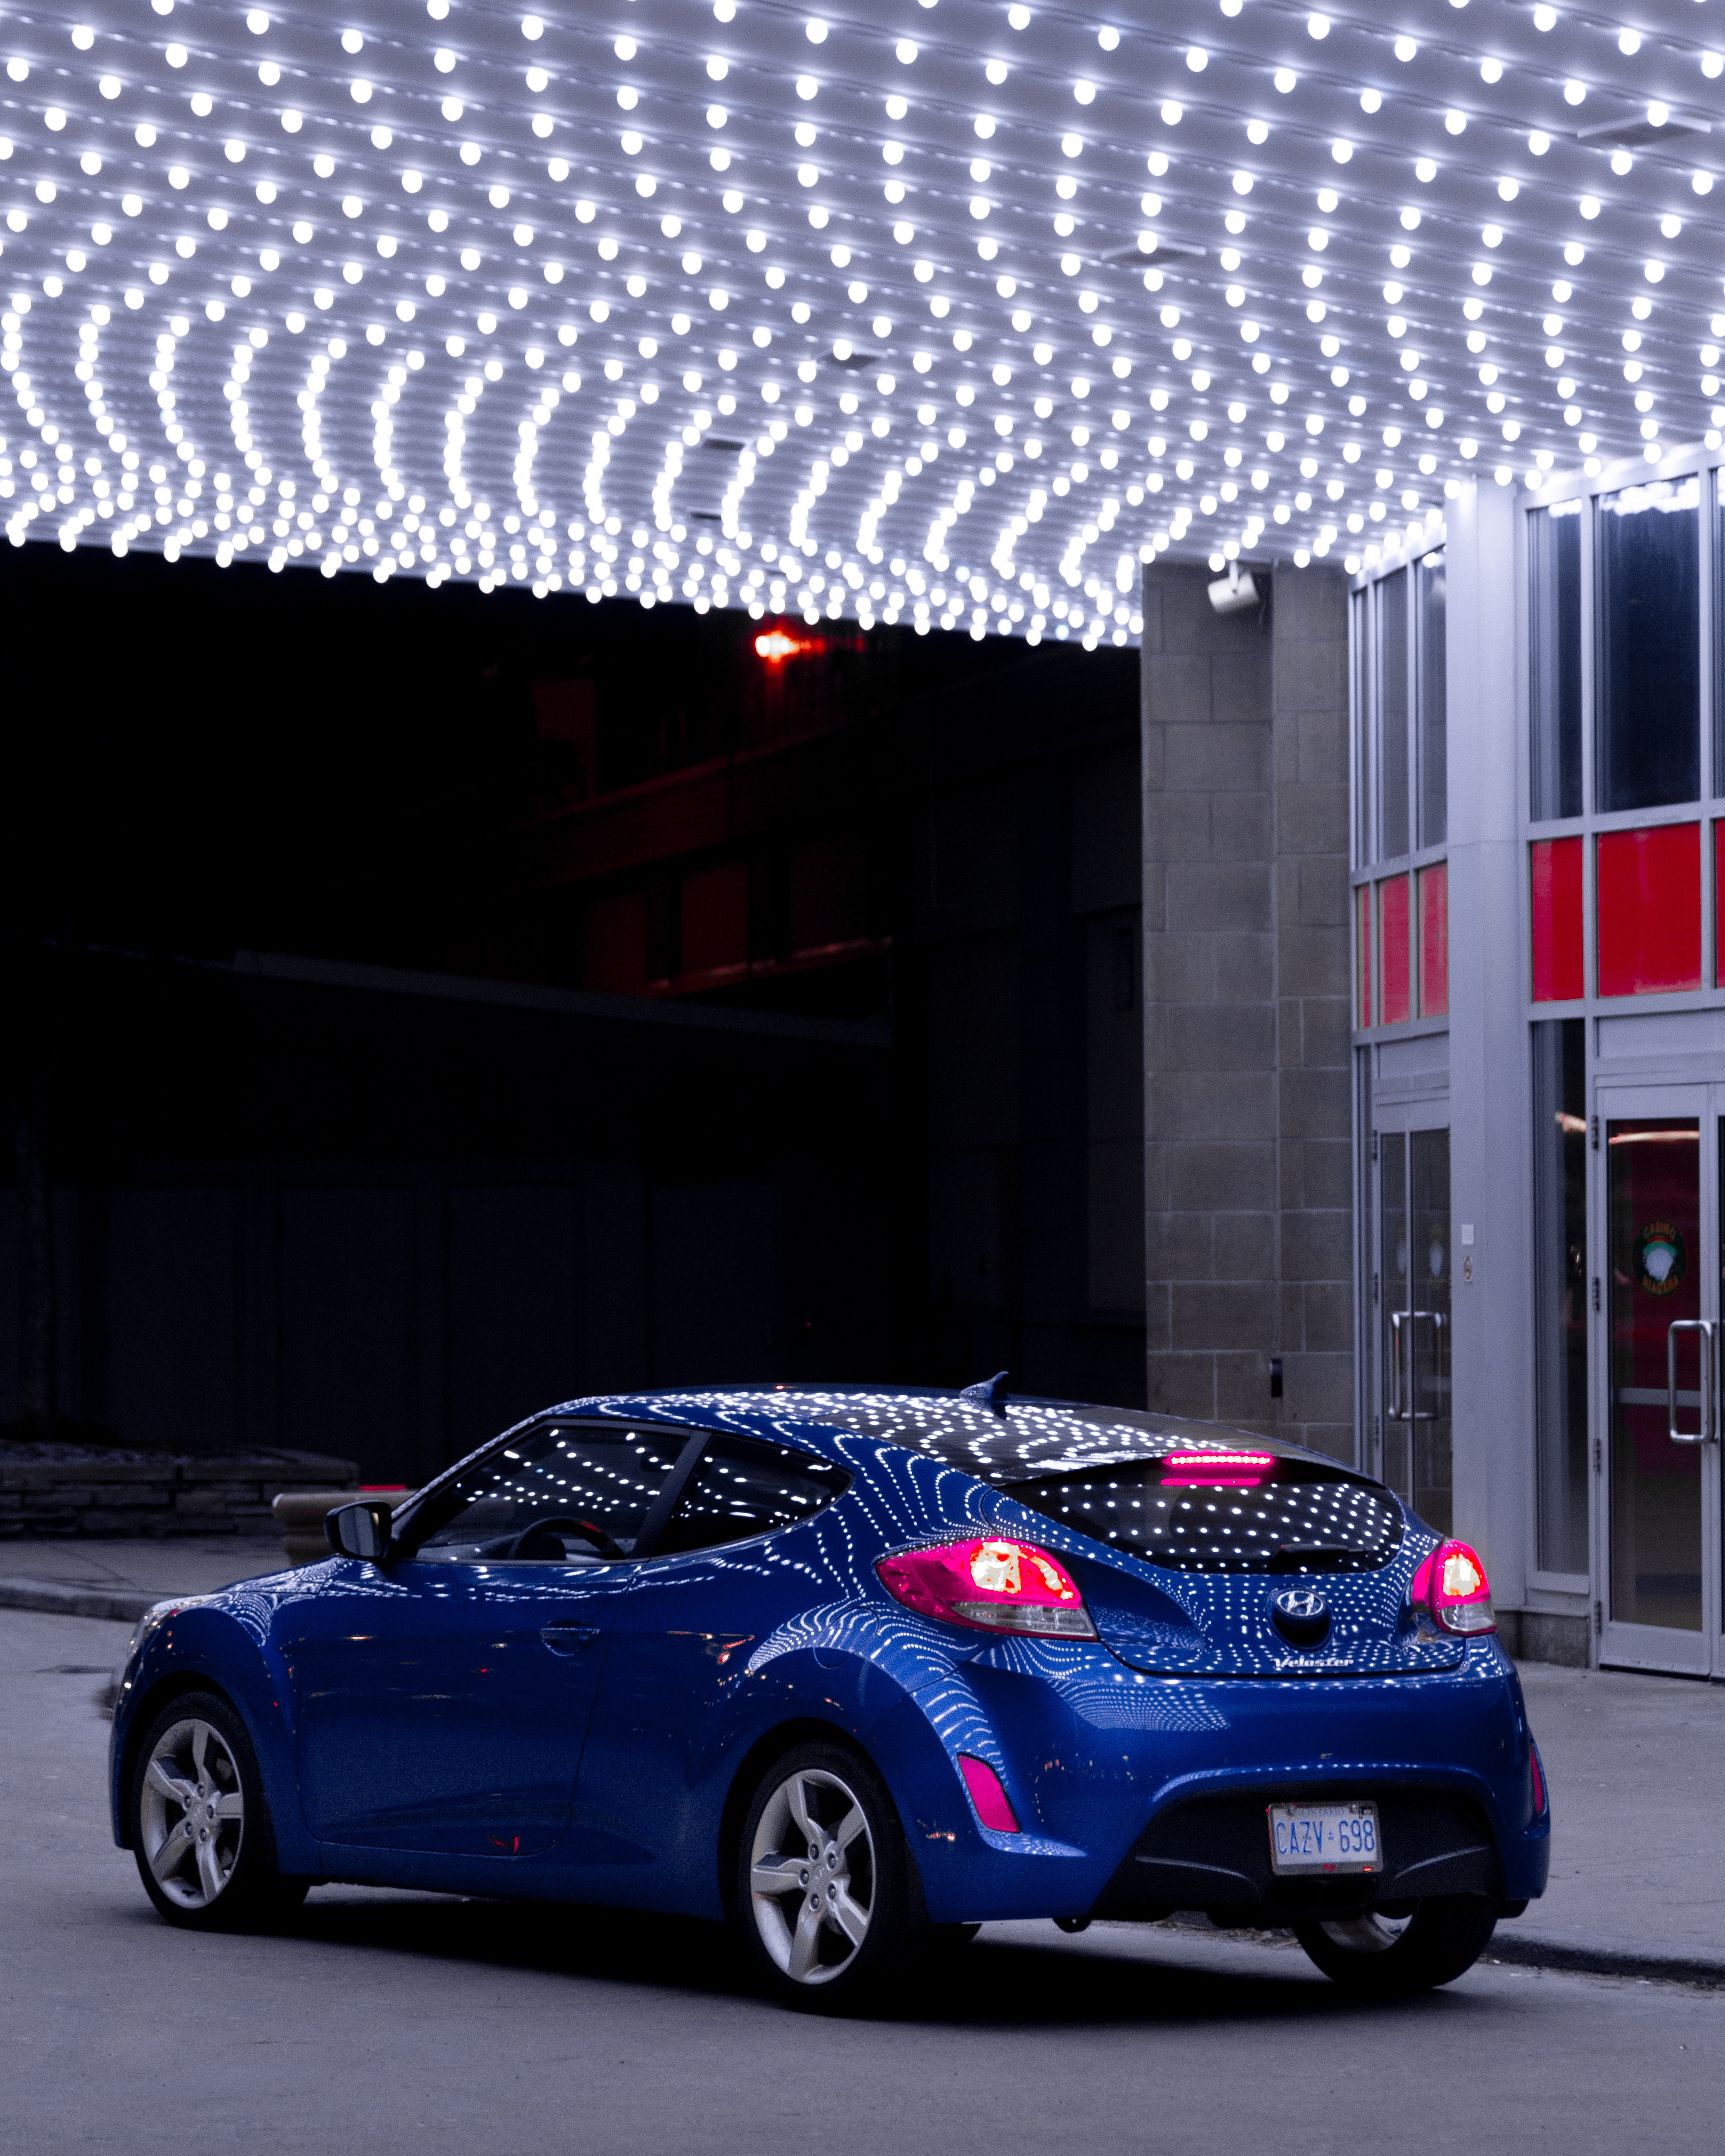 shine, hyundai, cars, blue, light, side view, street iphone wallpaper